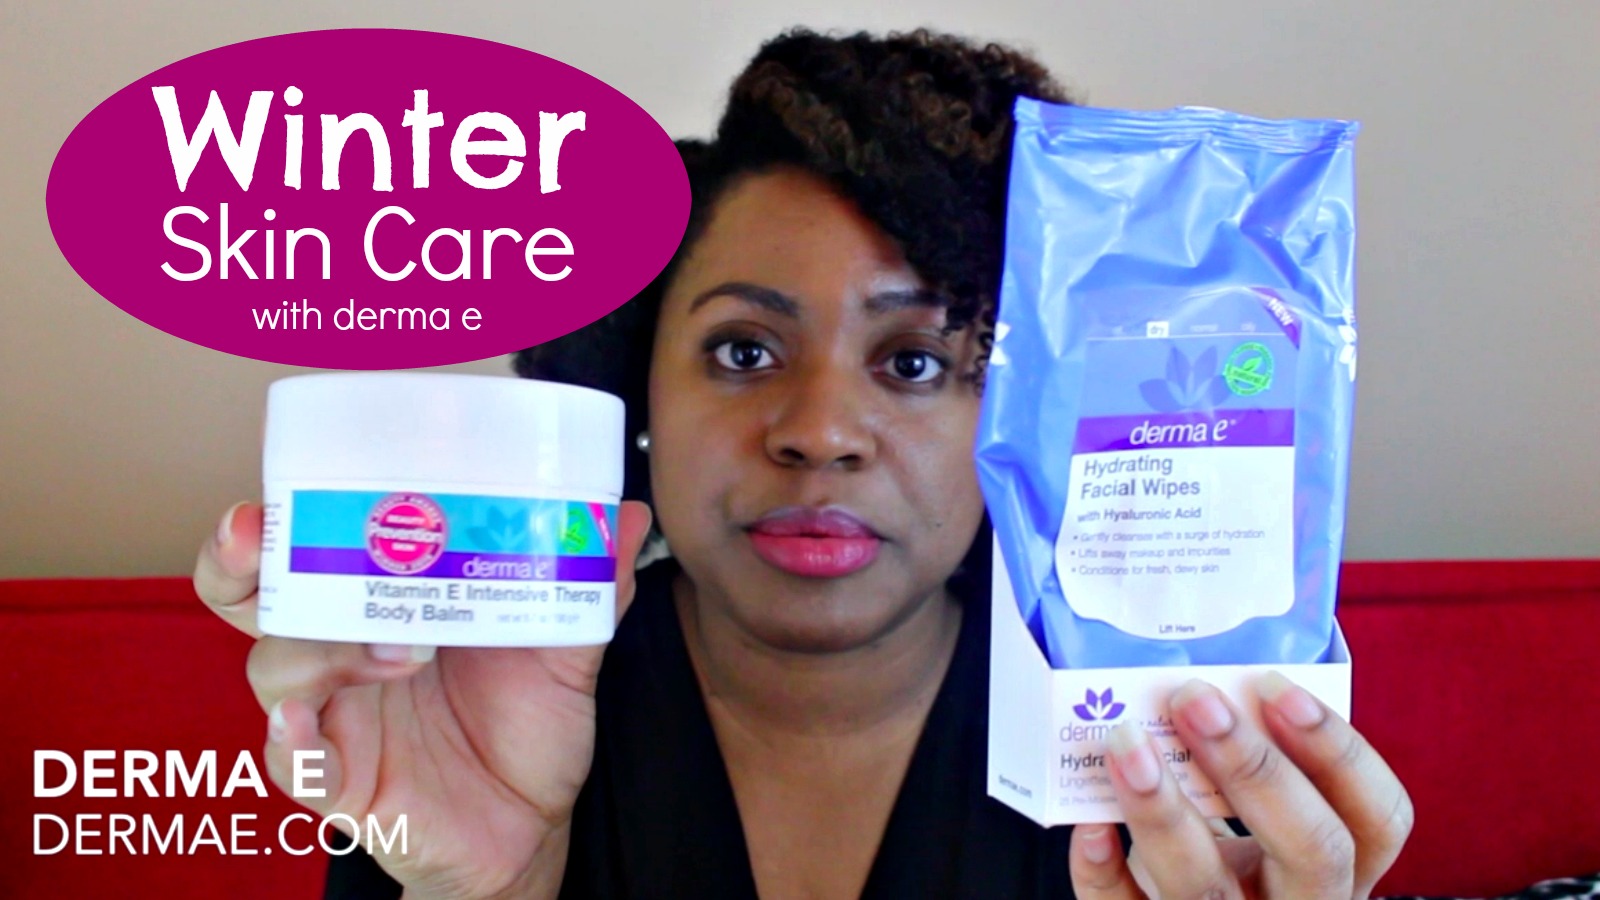 derma e skin care products, winter skin care routine video